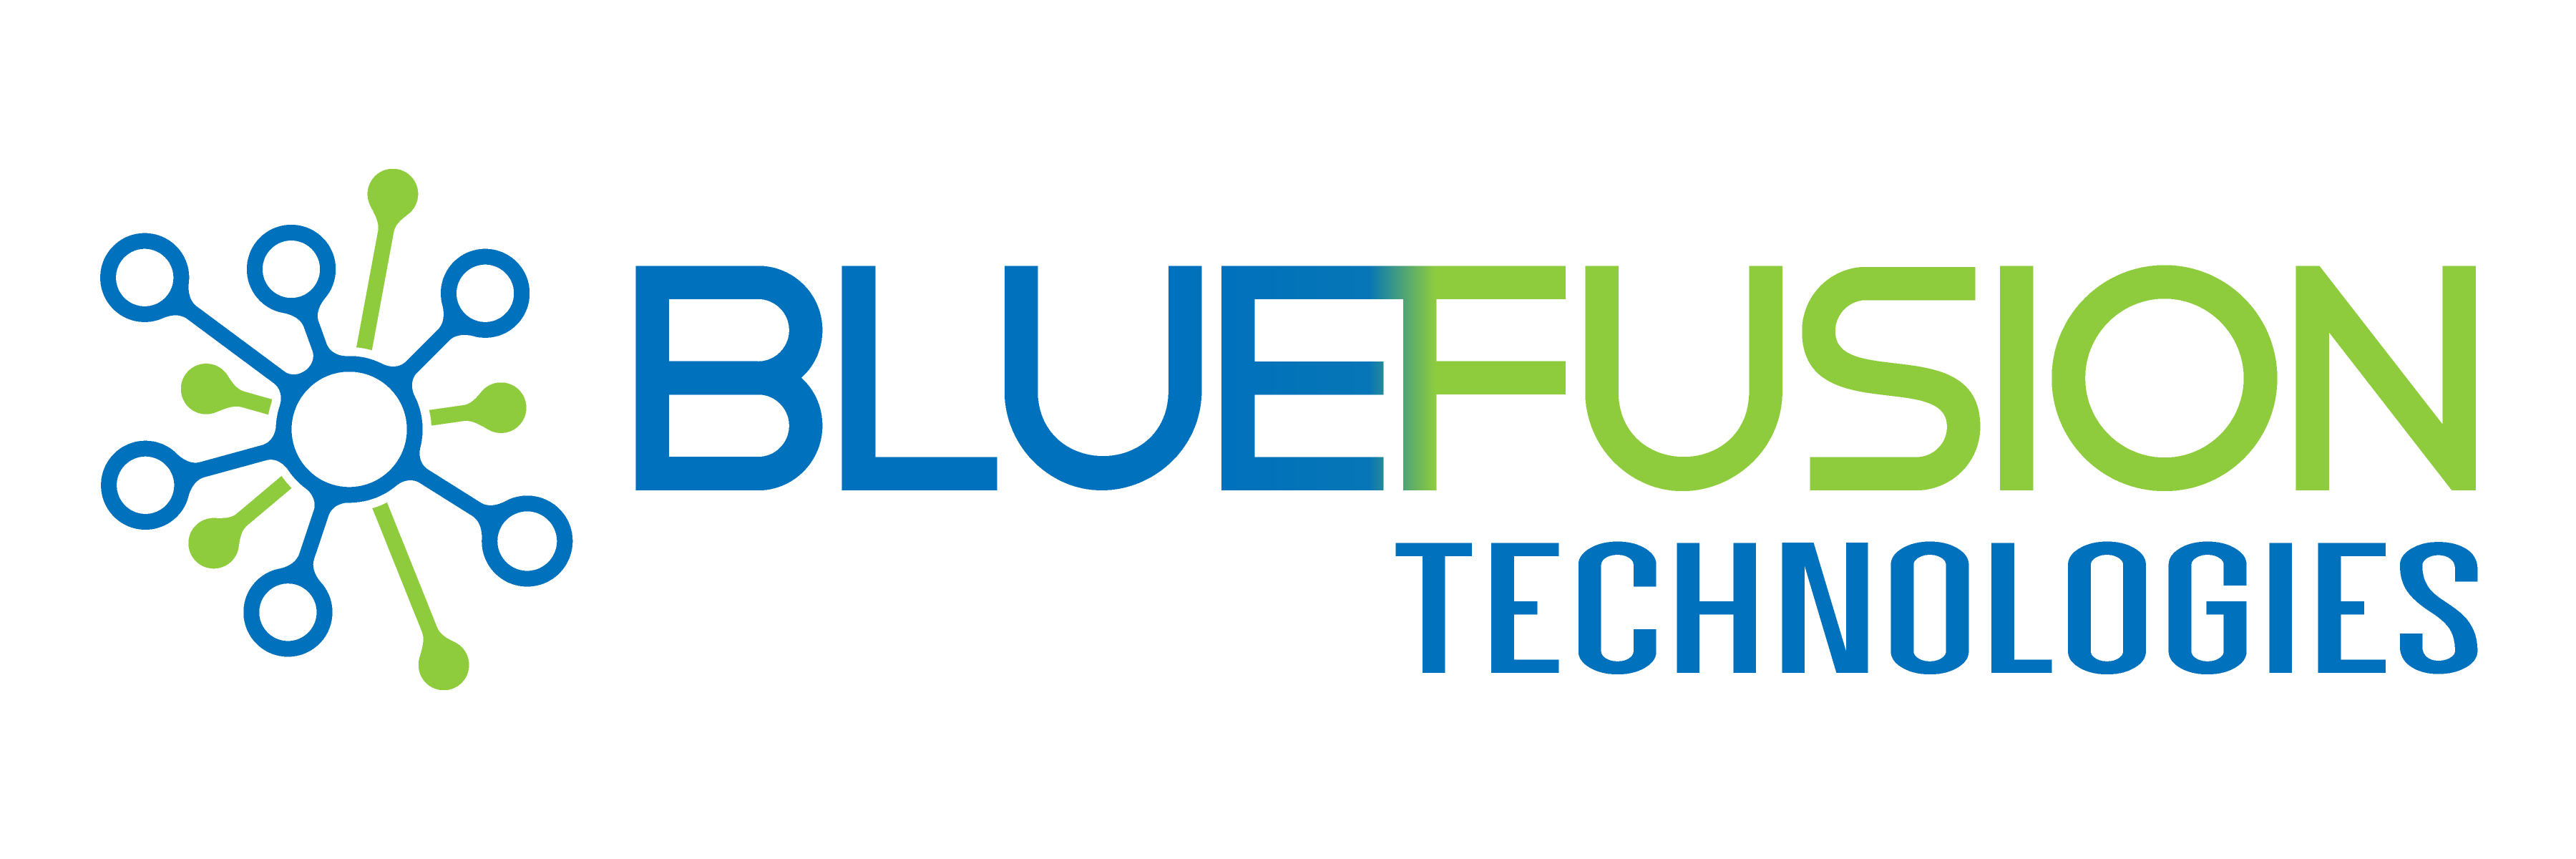 Blue Fusion: Data Access on Demand Technology enabling Edge Analytics